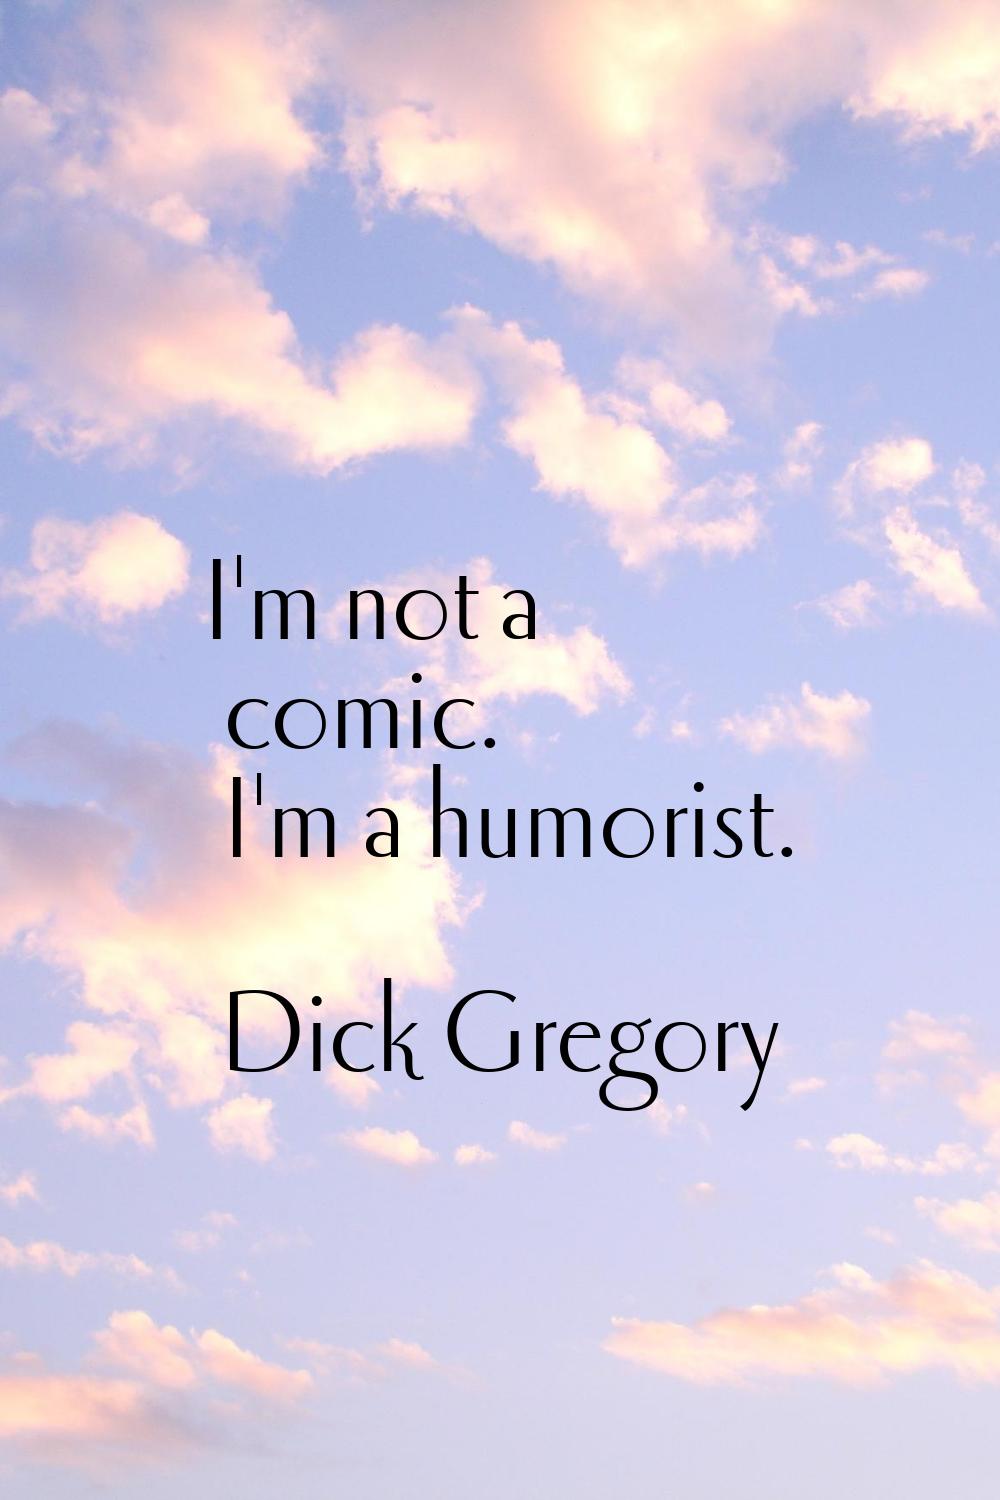 I'm not a comic. I'm a humorist.